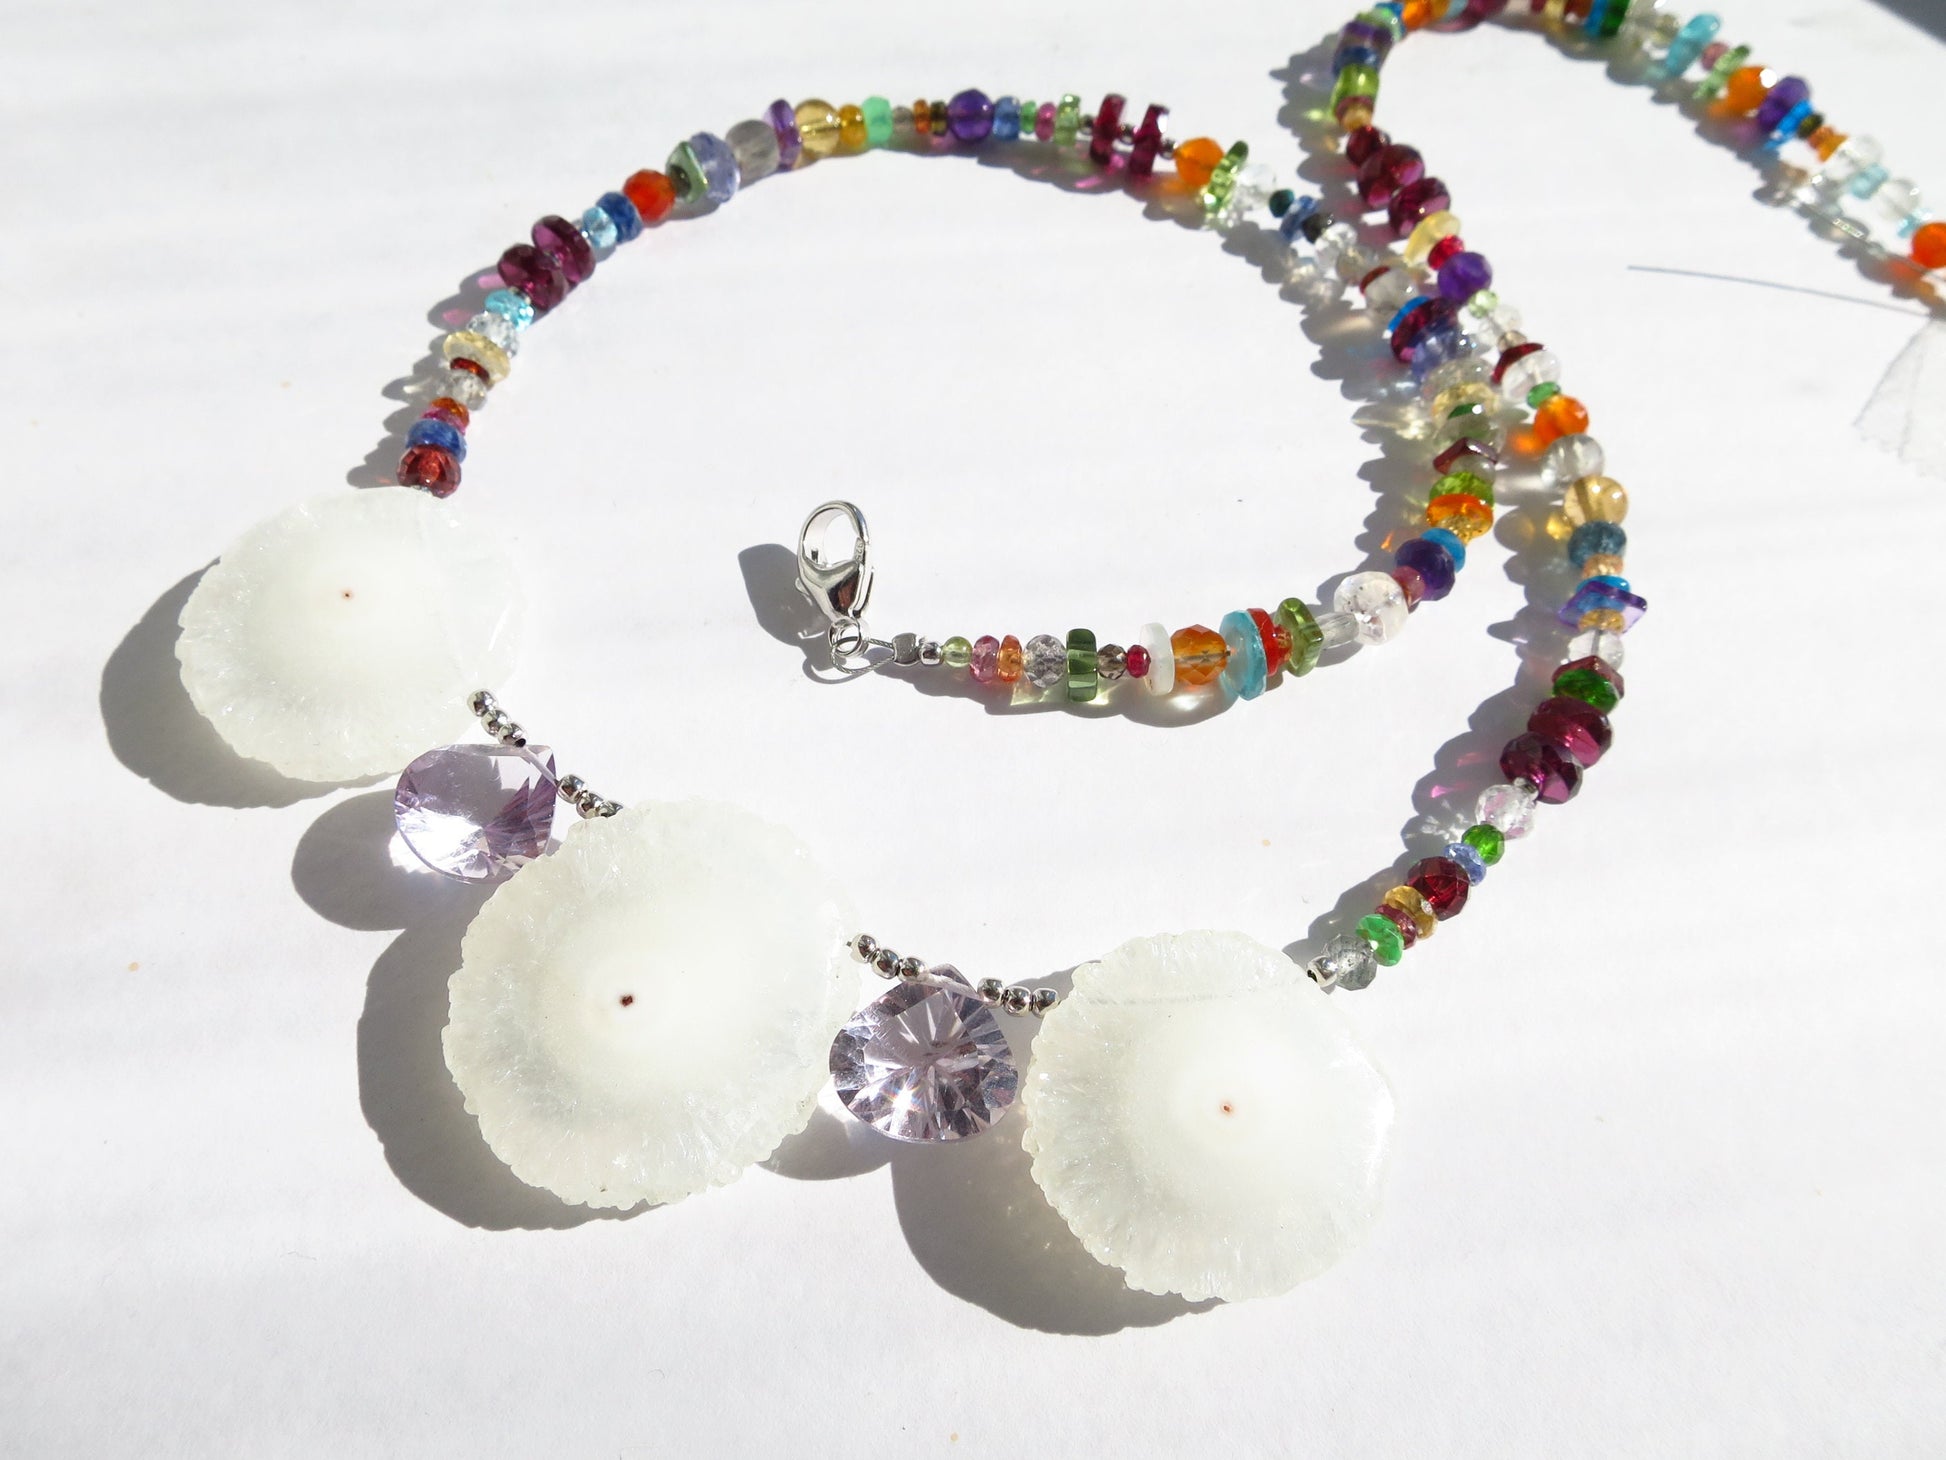 Rainbow necklace colorful gems natural untreated undyed gemstones solar quartz pendant labradorite tourmaline Handmade unique piece